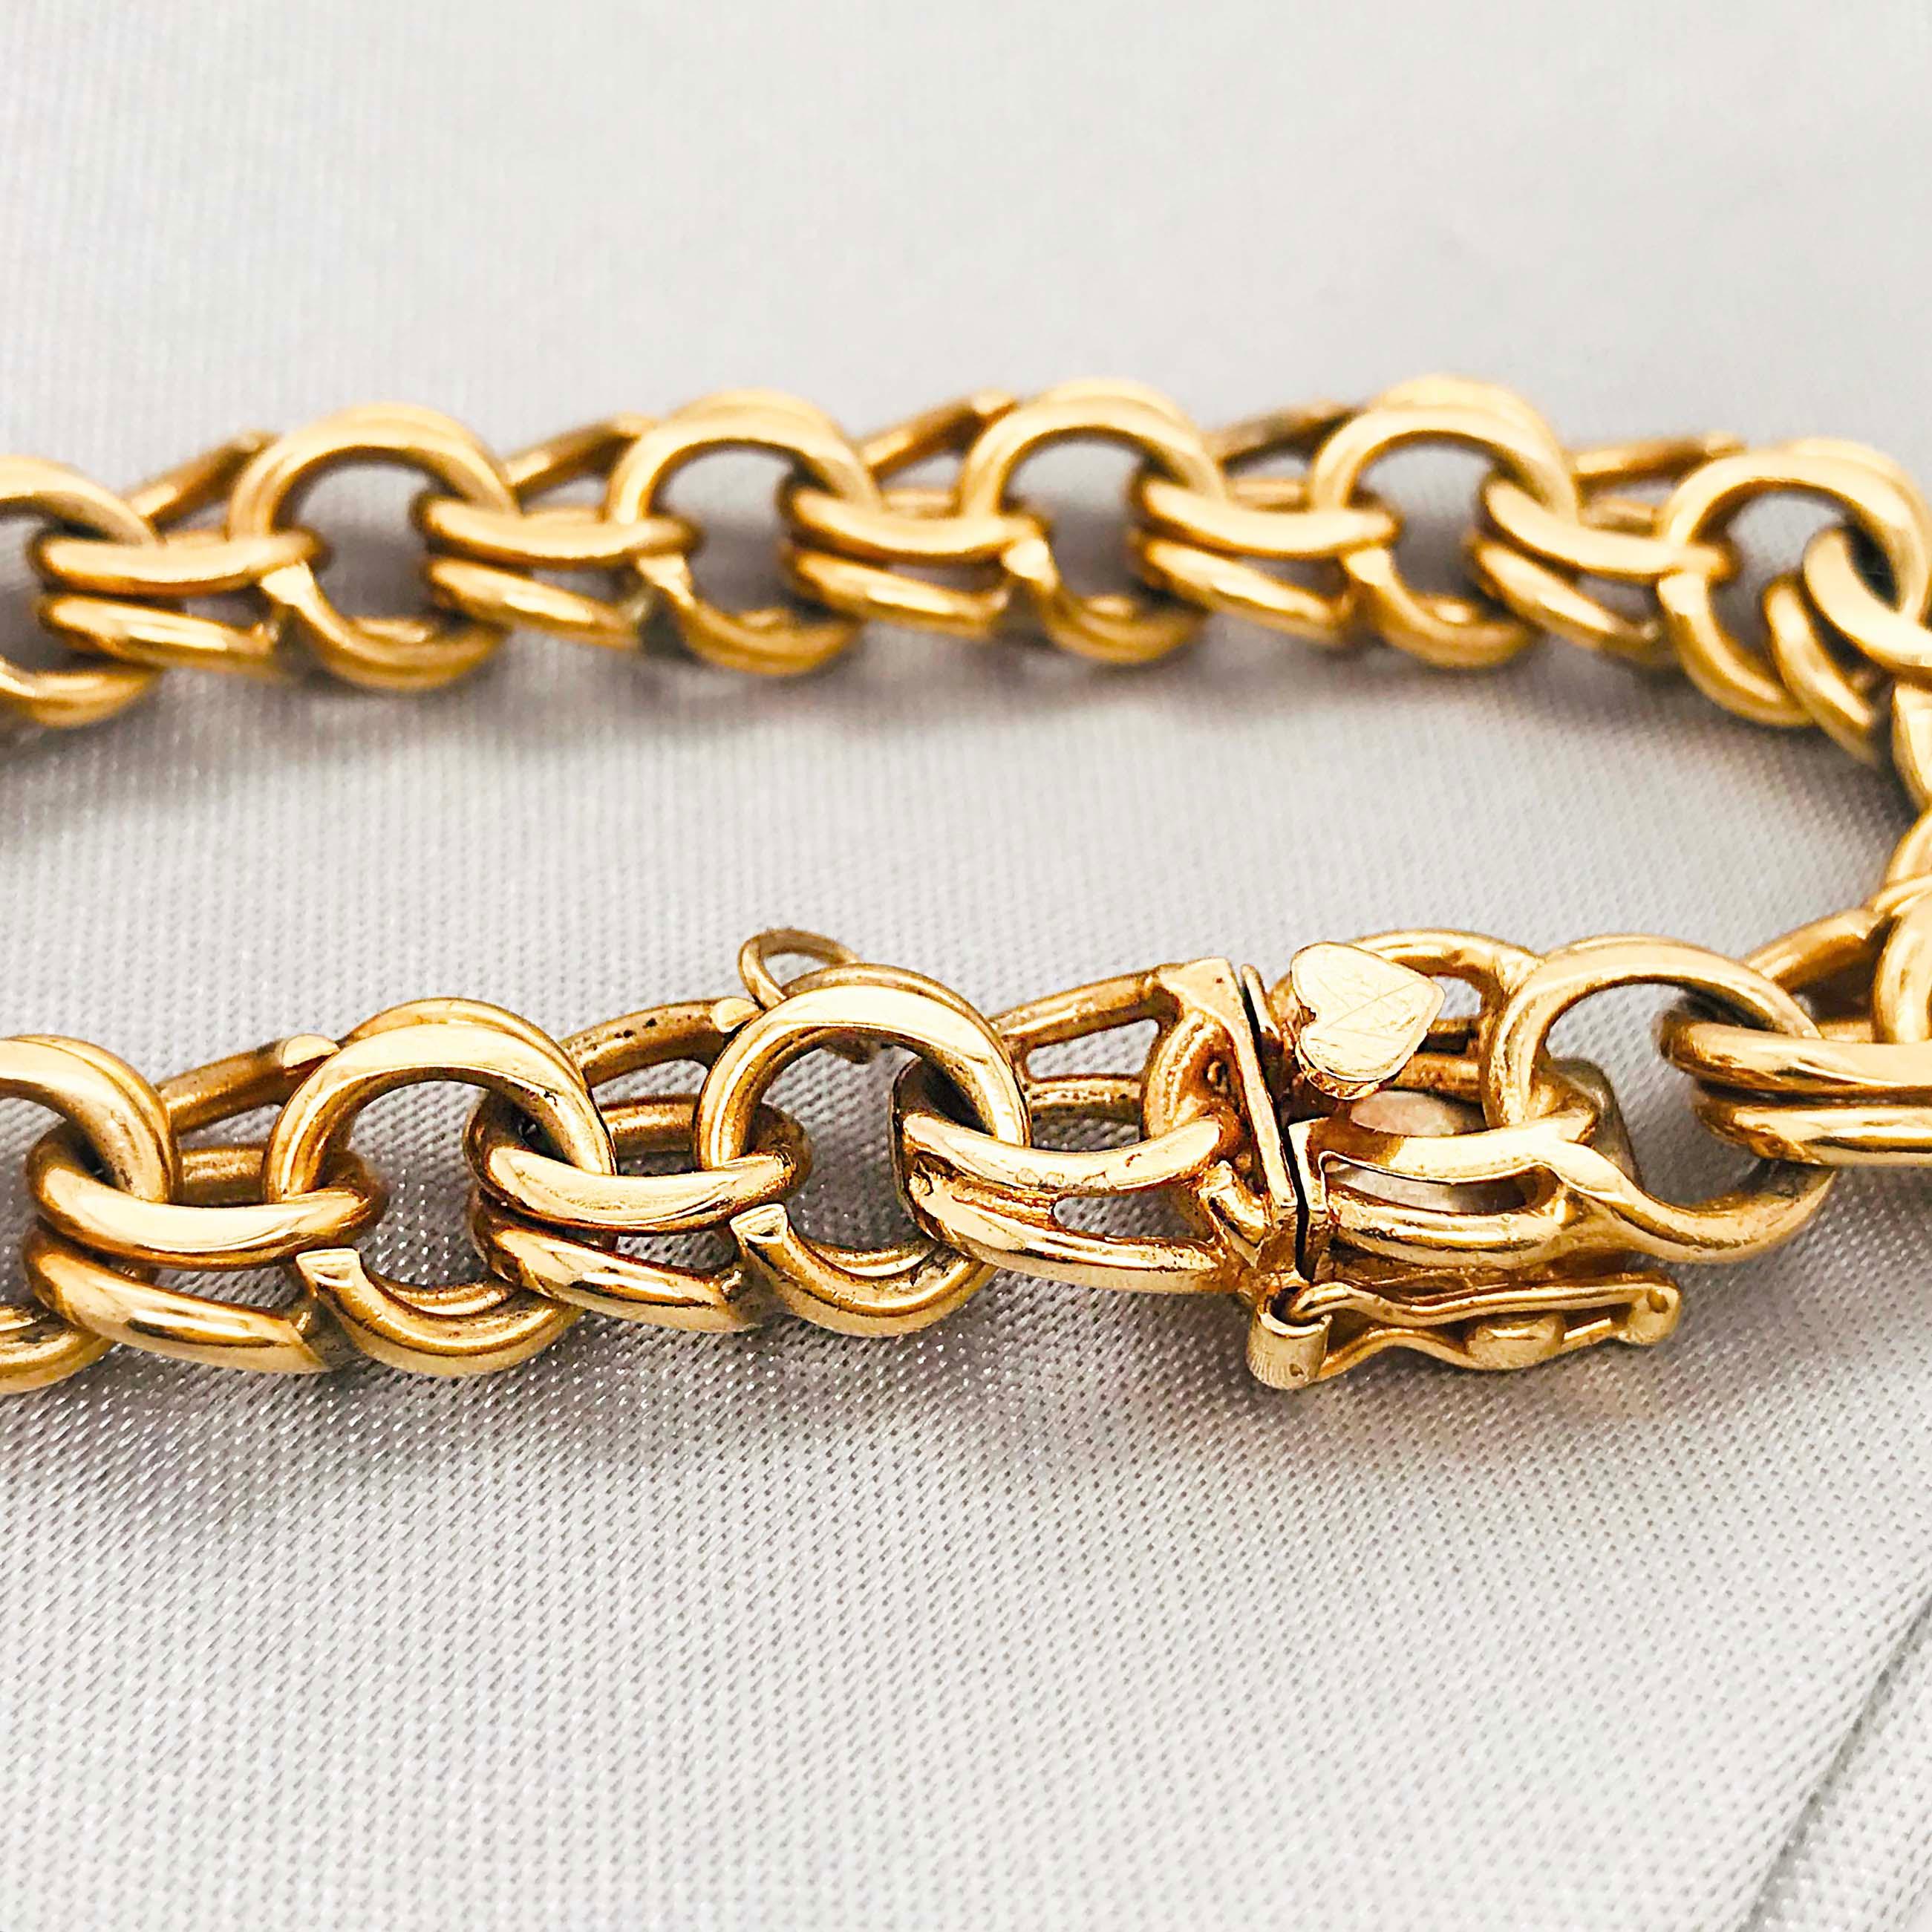 Heavy Gold Charm Bracelet, 14 Karat Large Gold Chain Bracelet 3